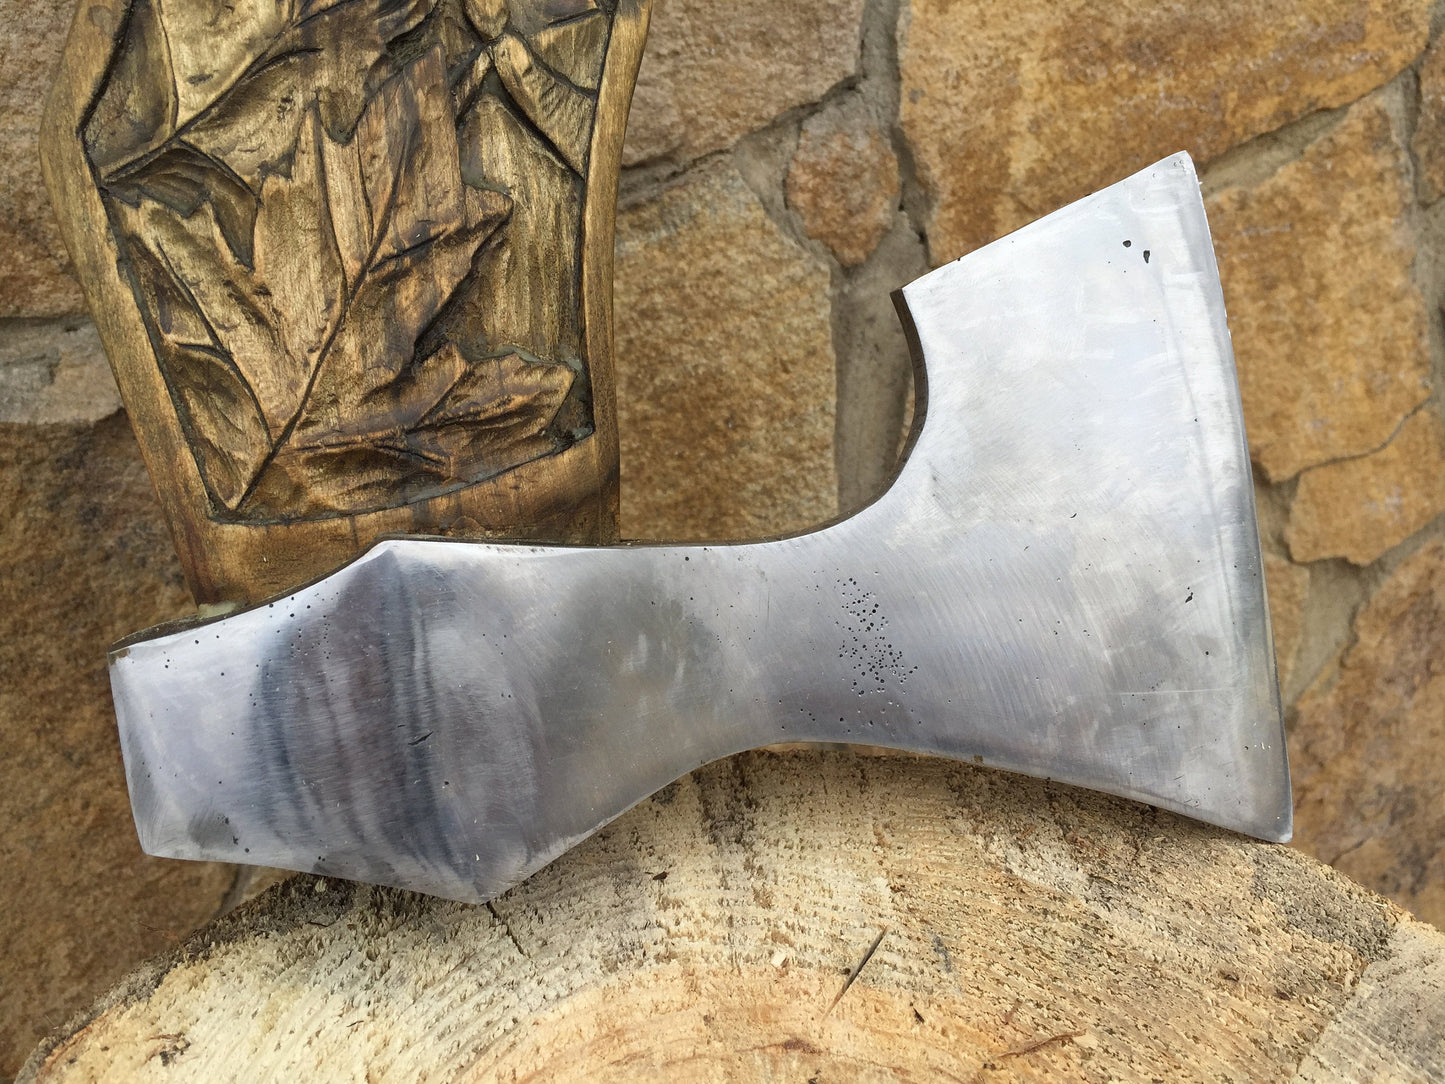 Axe gift, viking axe, tomahawk, viking hatchet, groomsman axe gift, fathers axe gift, carving axe tool, wildlife axe tool, survival gear